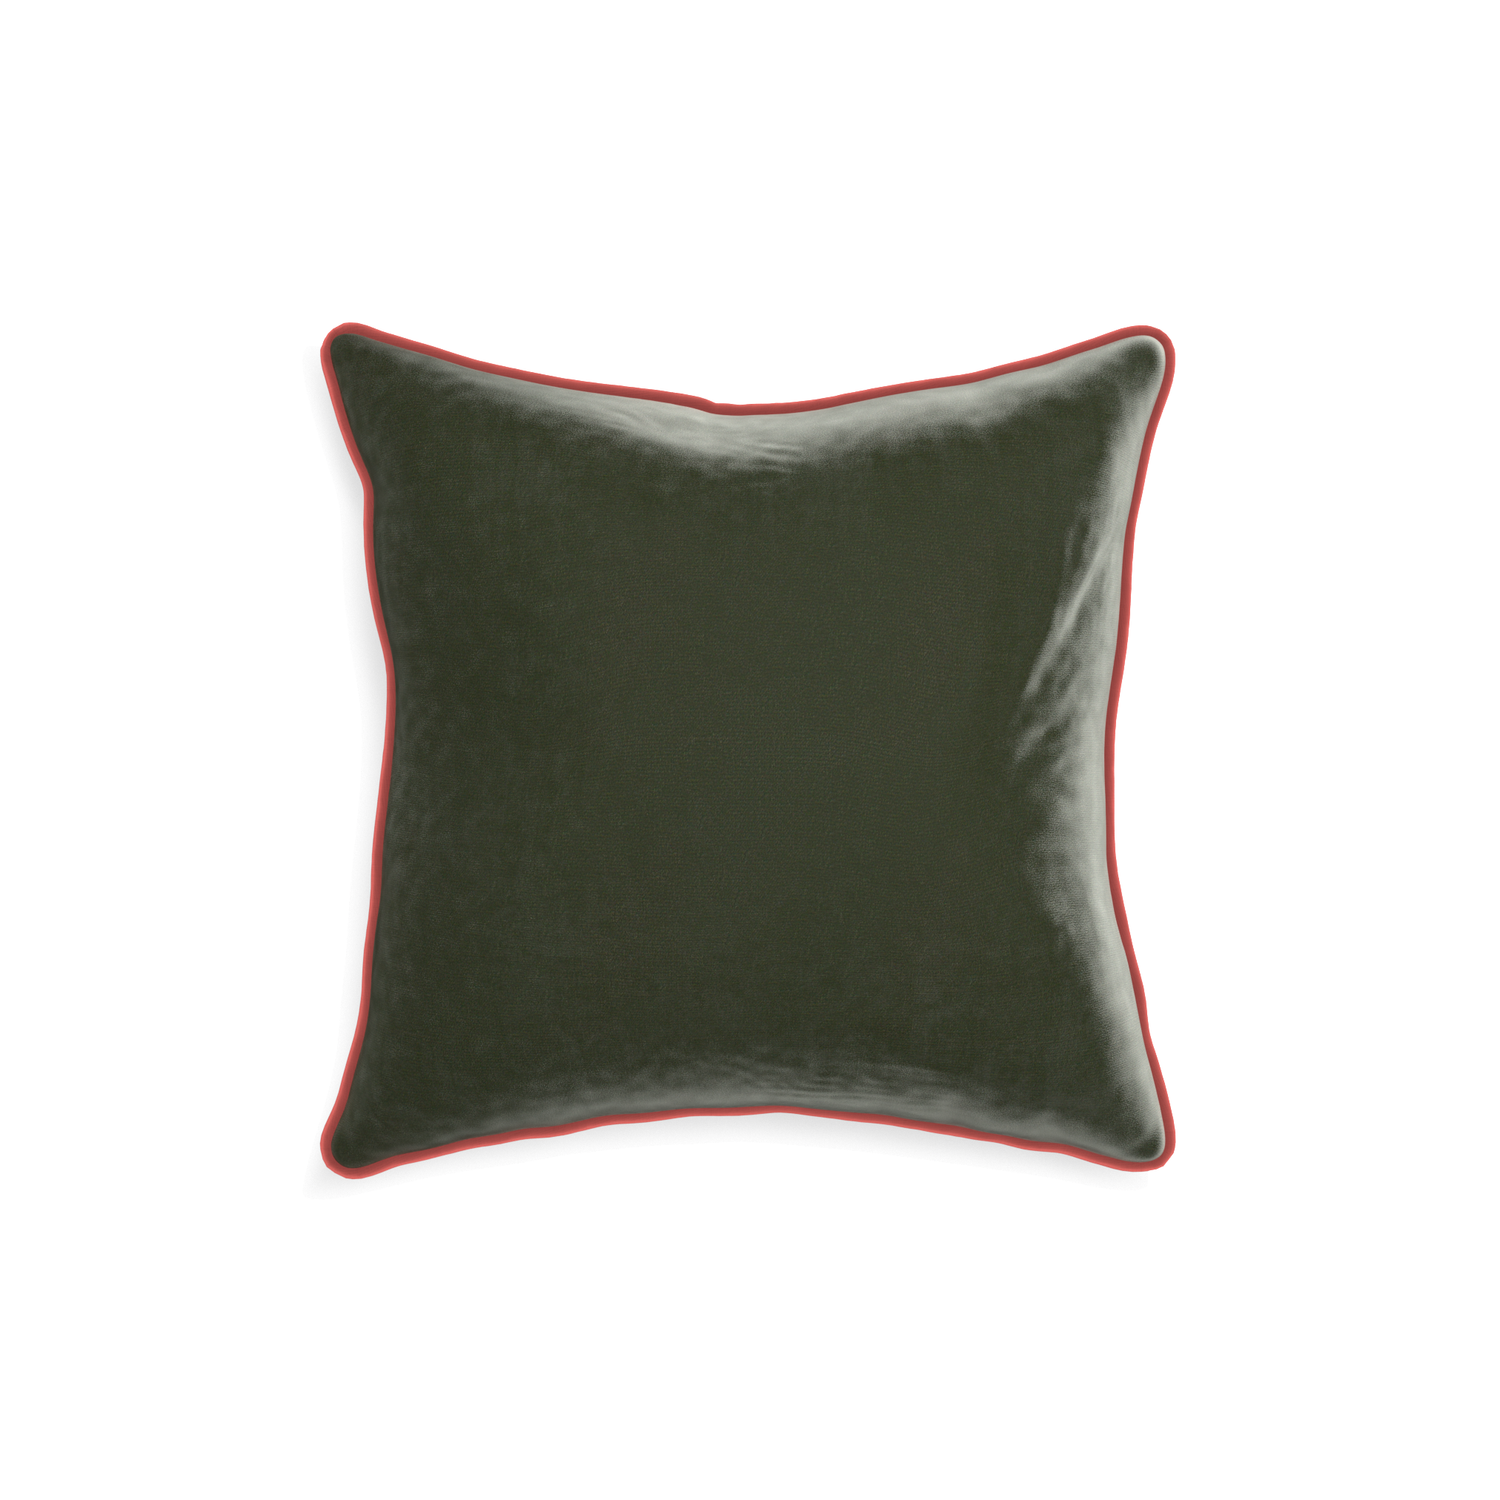 18-square fern velvet custom pillow with c piping on white background